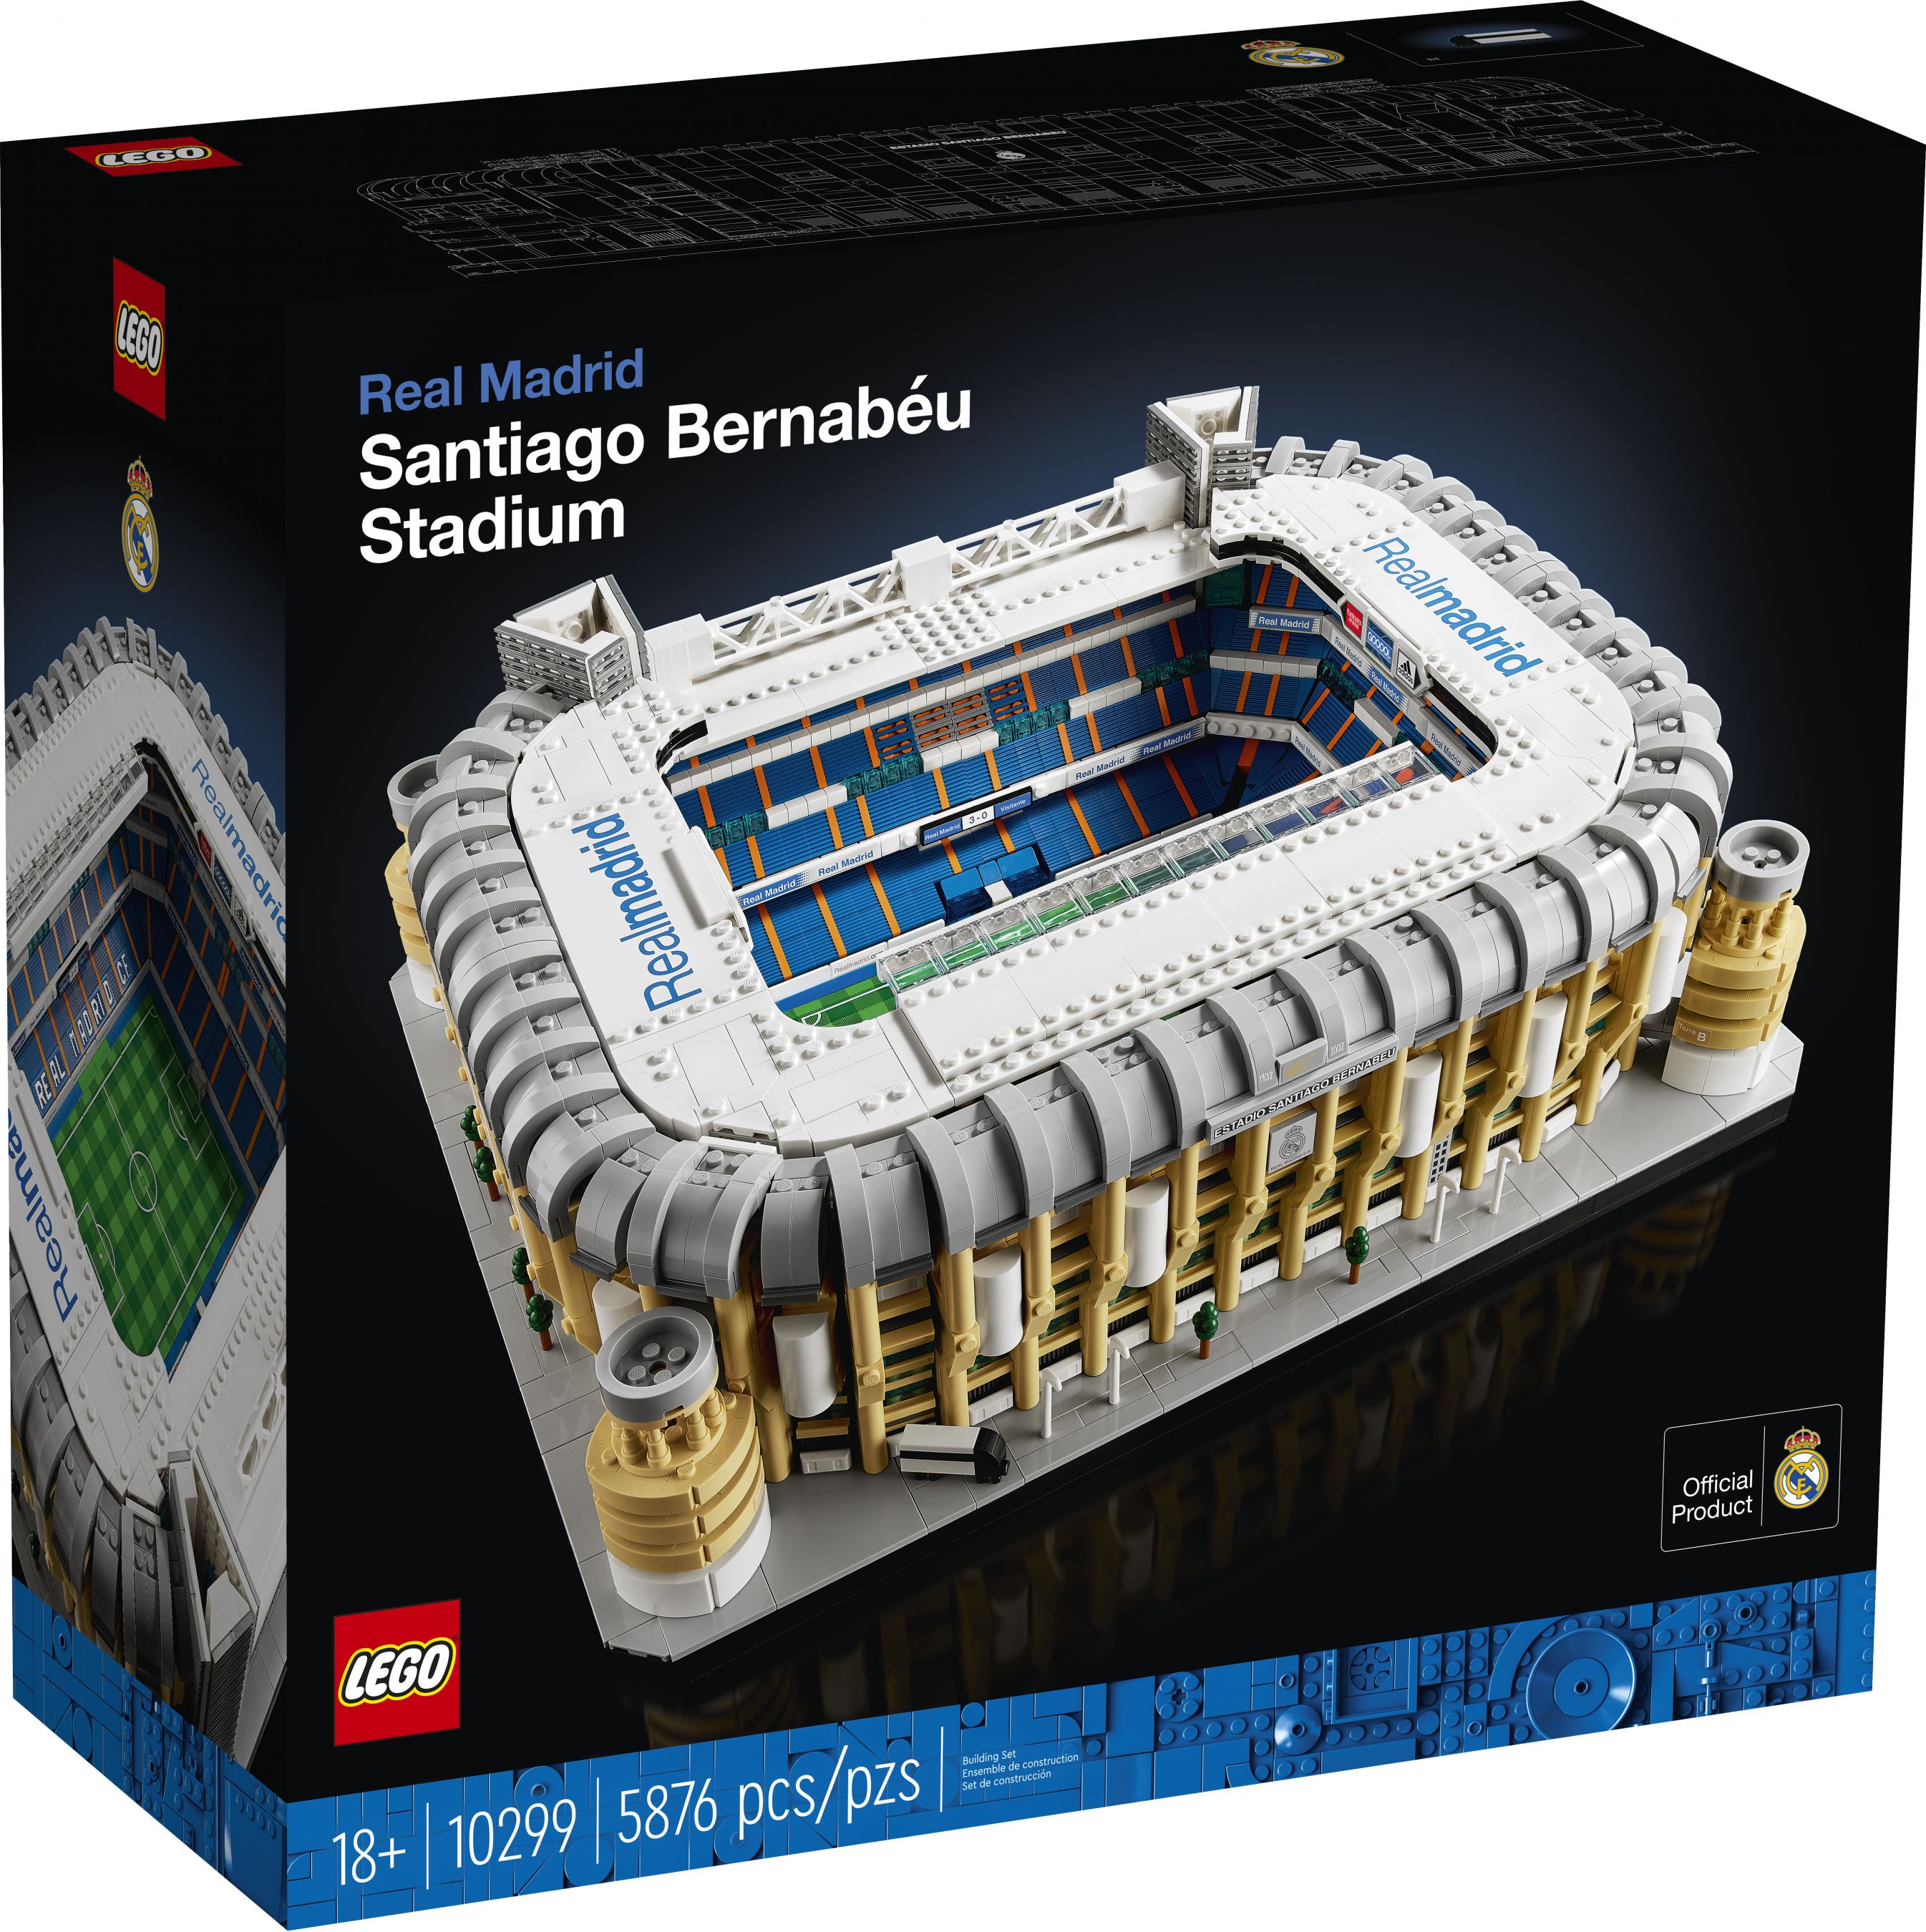 LEGO Advanced Models 10299 Real Madrid - Santiago Bernabéu Stadion LEGO_10299_Box1_v29.jpg